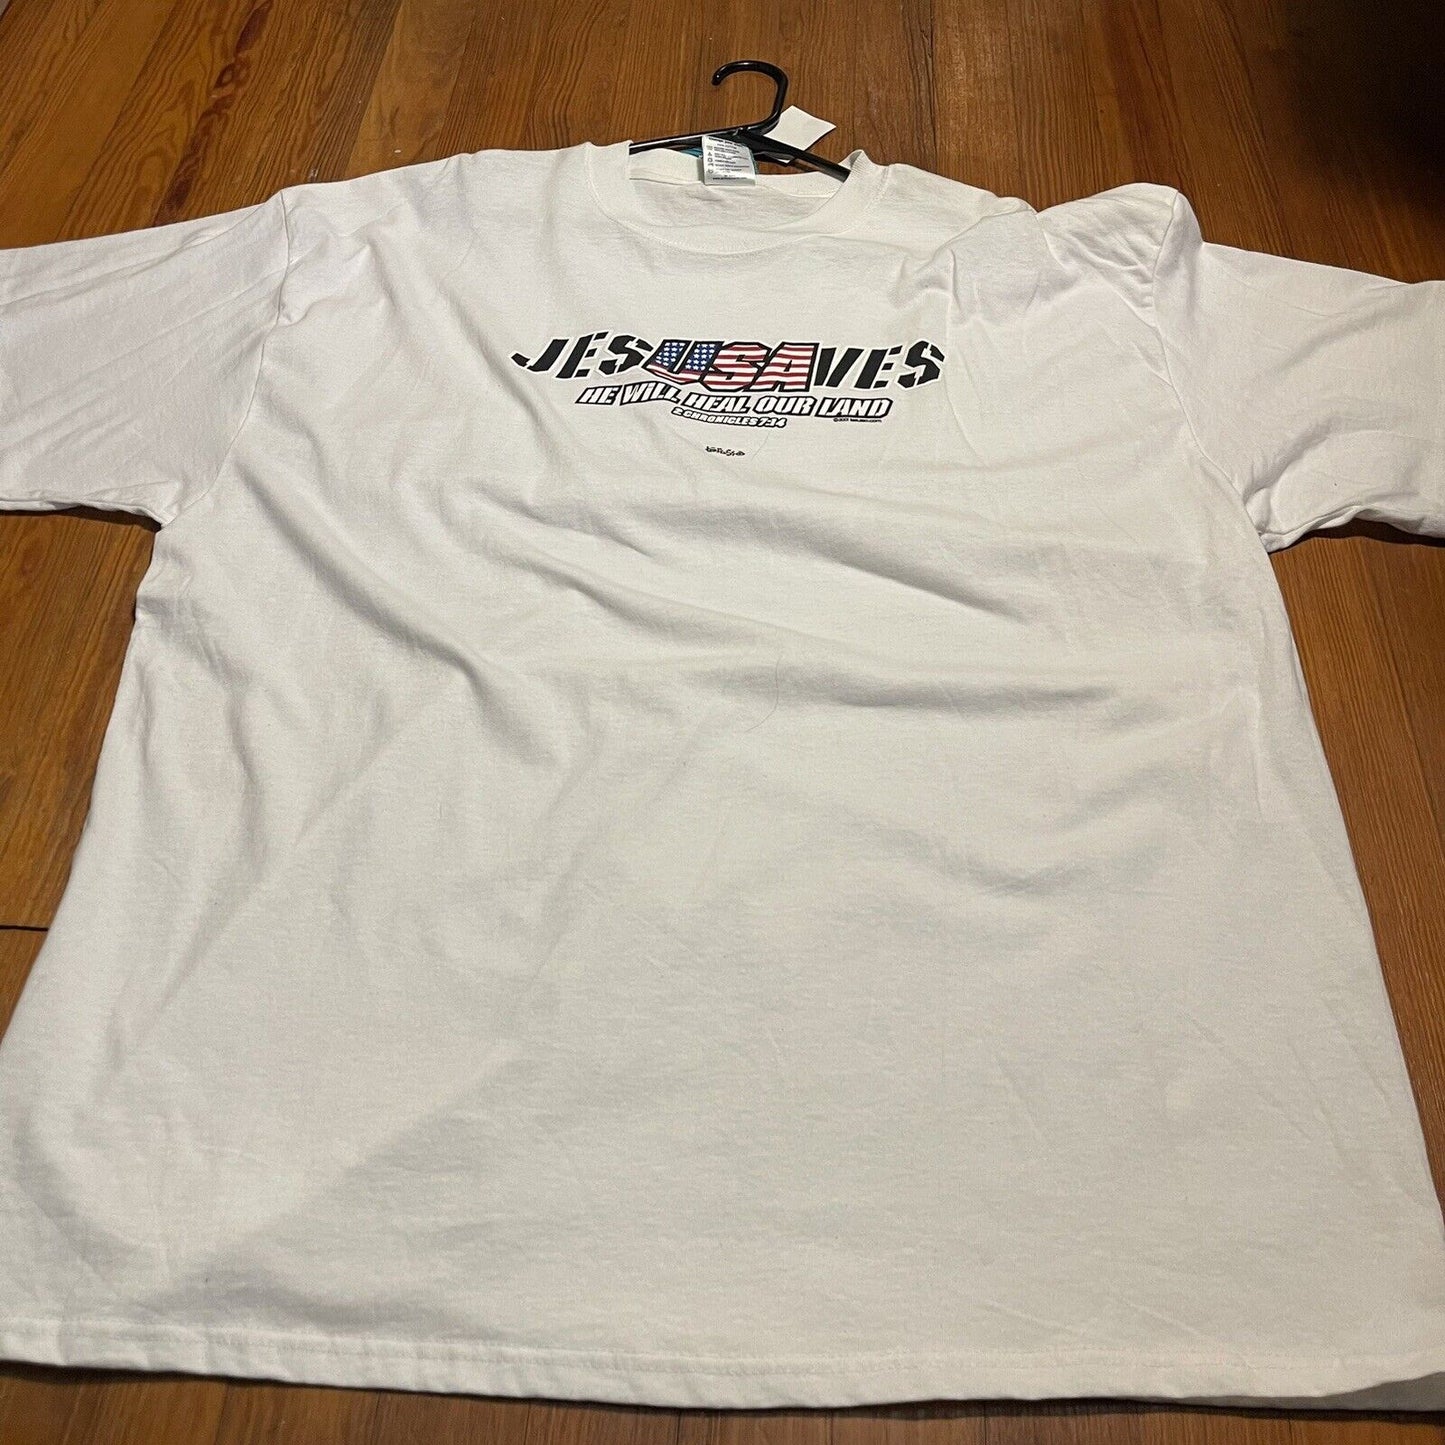 Vintage Jesus Shirt Adult Xxl White Jesus Saves USA 9/11 2001 Men